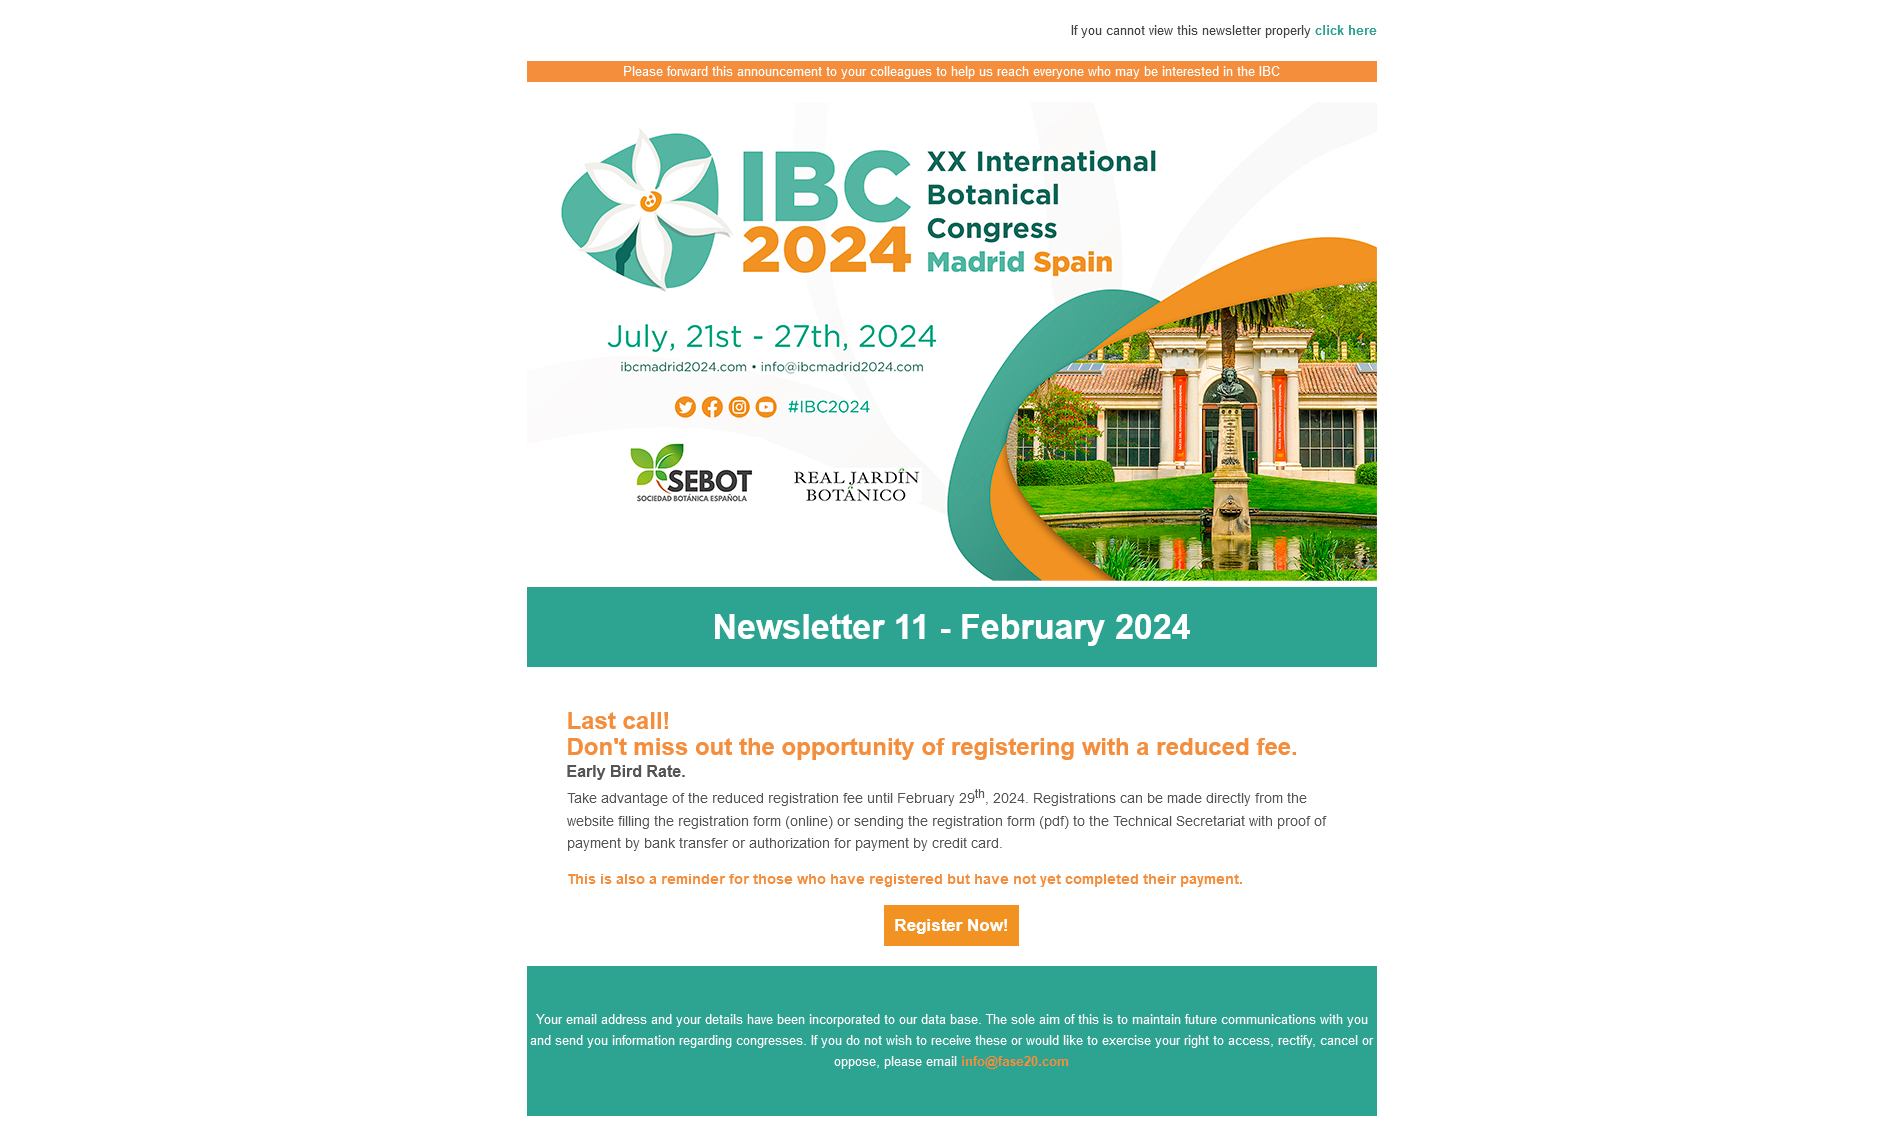 XX INTERNATIONAL BOTANICAL CONGRESS MADRID 2024 - Newsletter 11